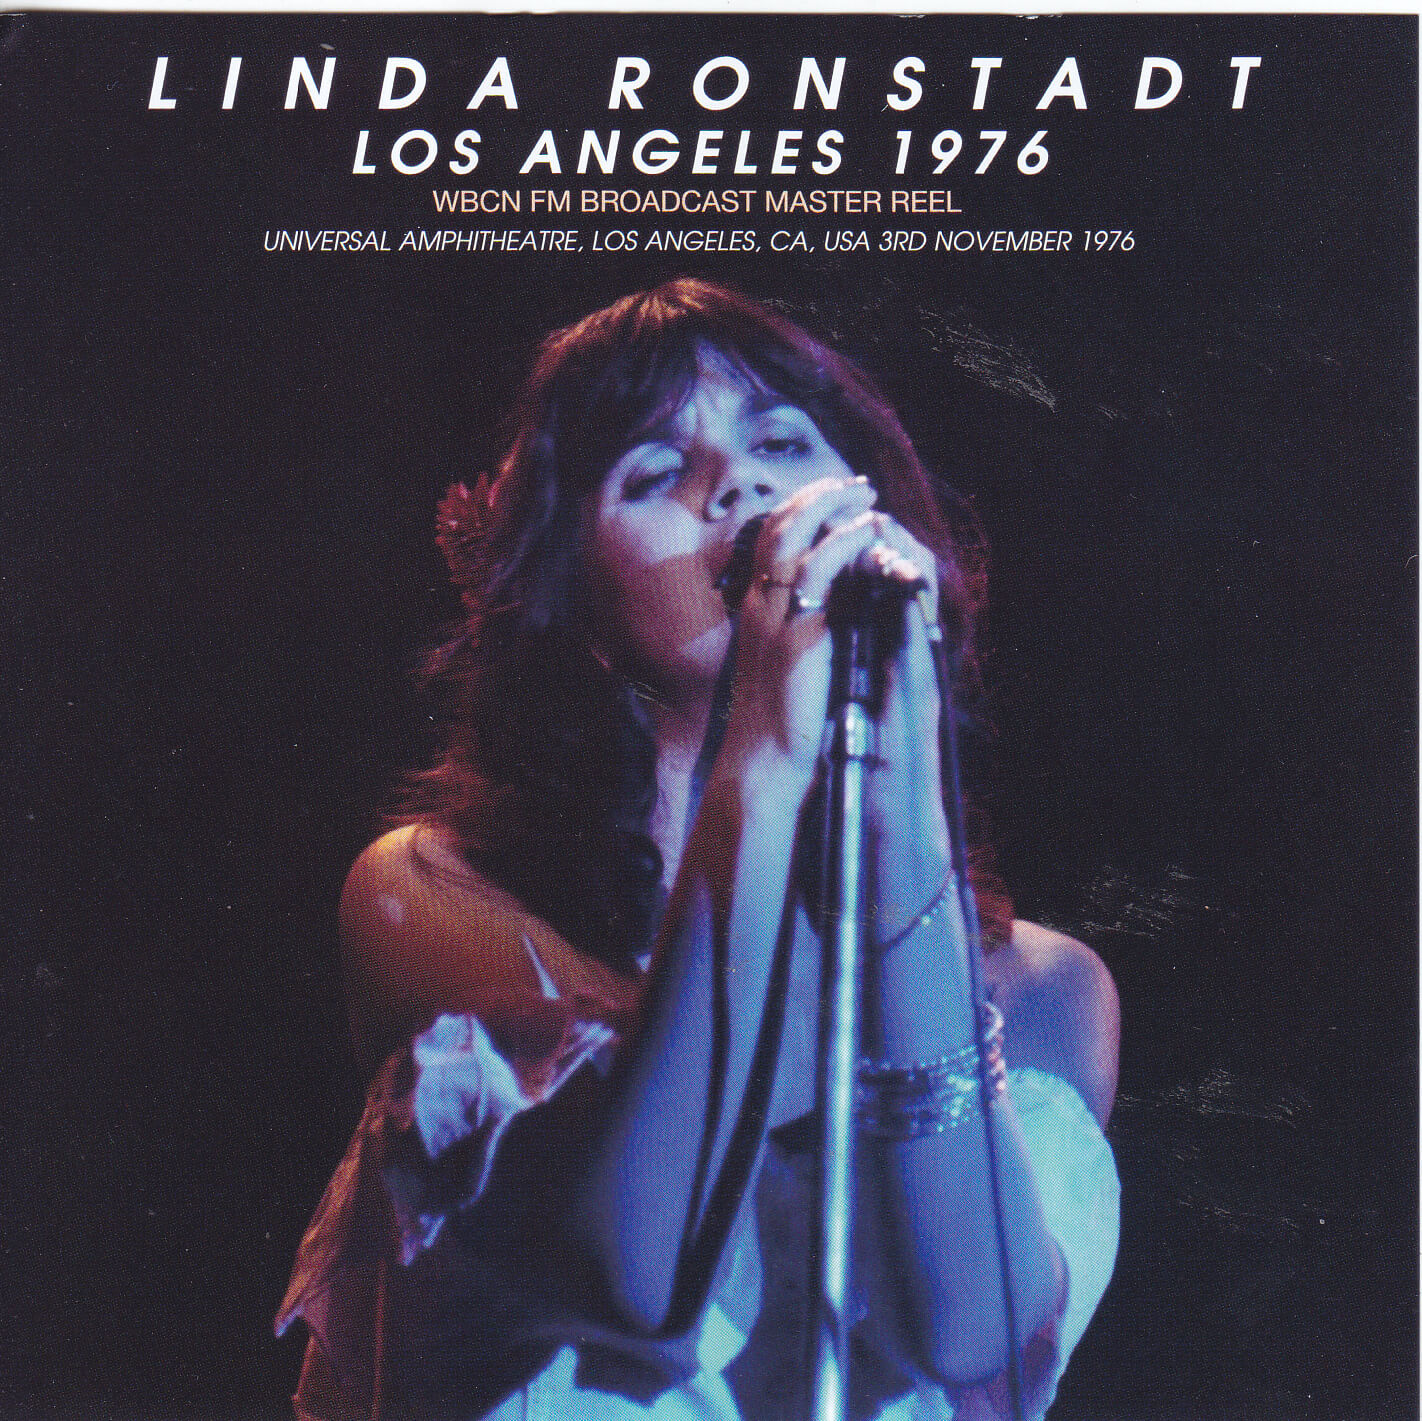 Linda Ronstadt / Los Angeles 1976 WBCN FM Broadcast Master Reel 